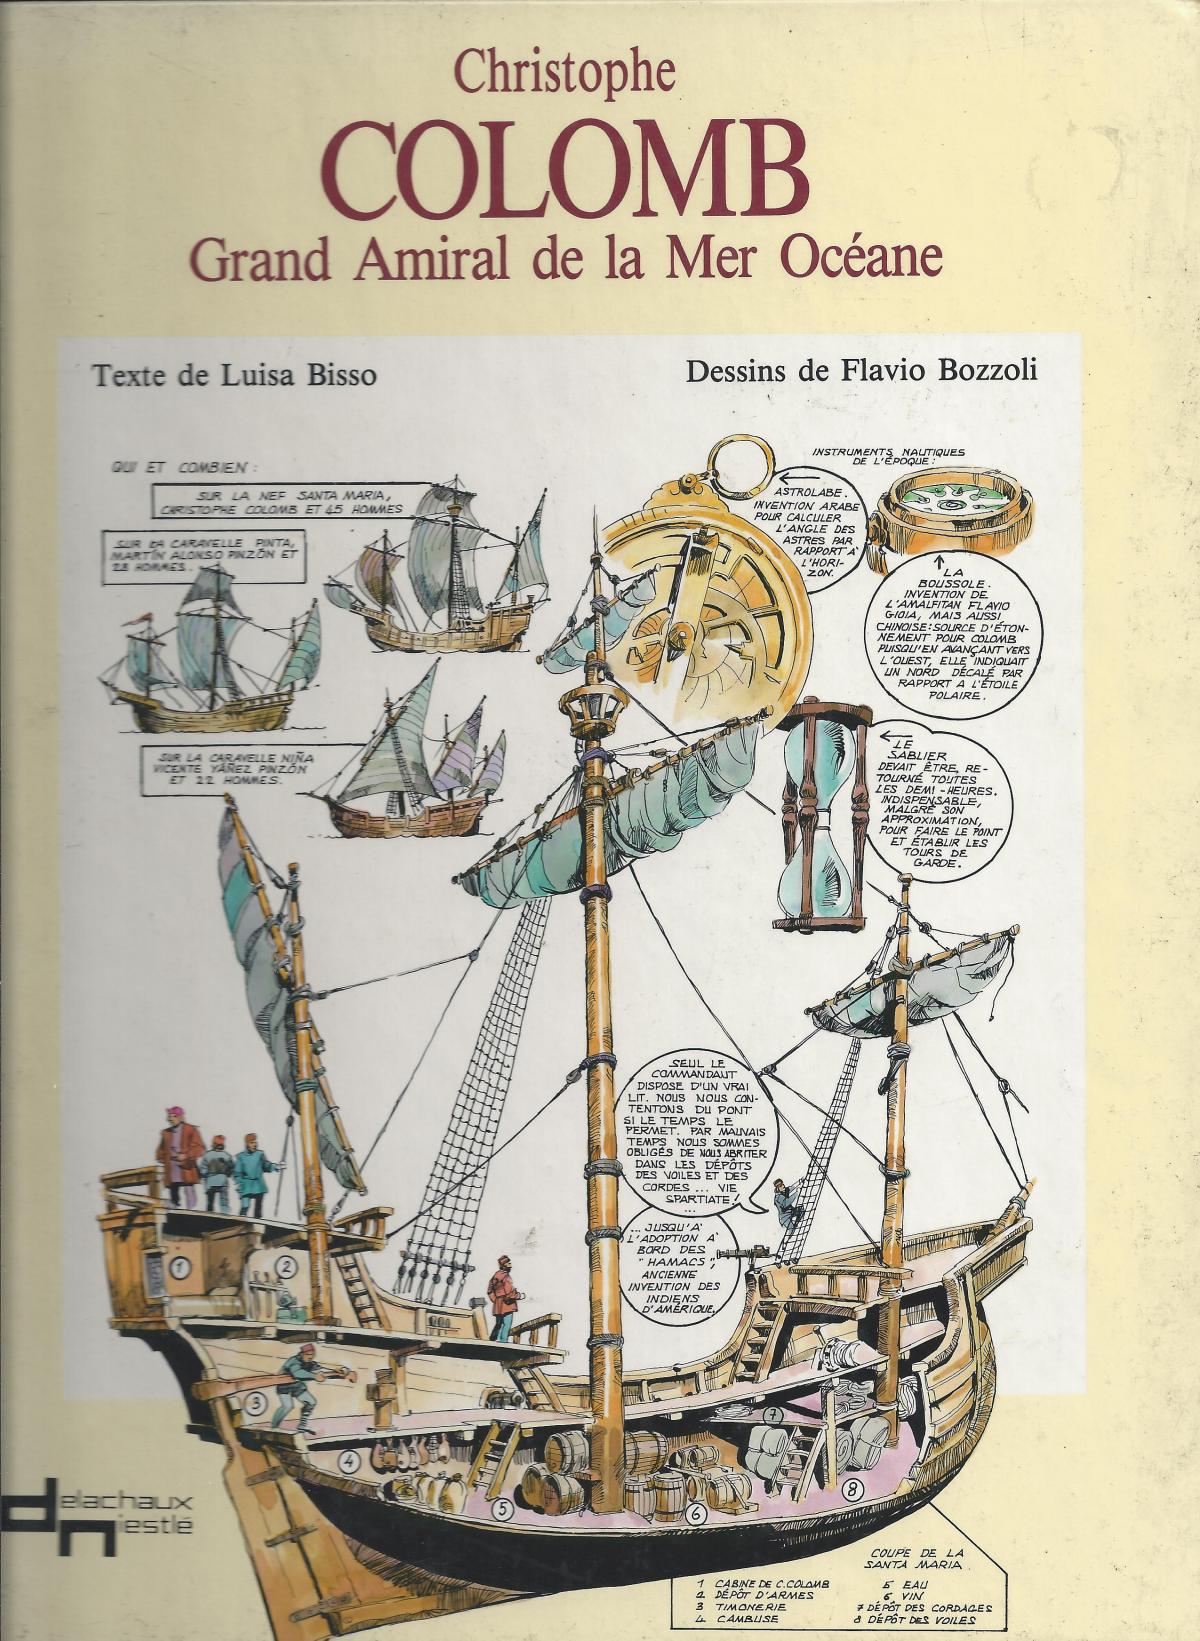 Christophe Colomb, Grand Amiral de la Mer Océane